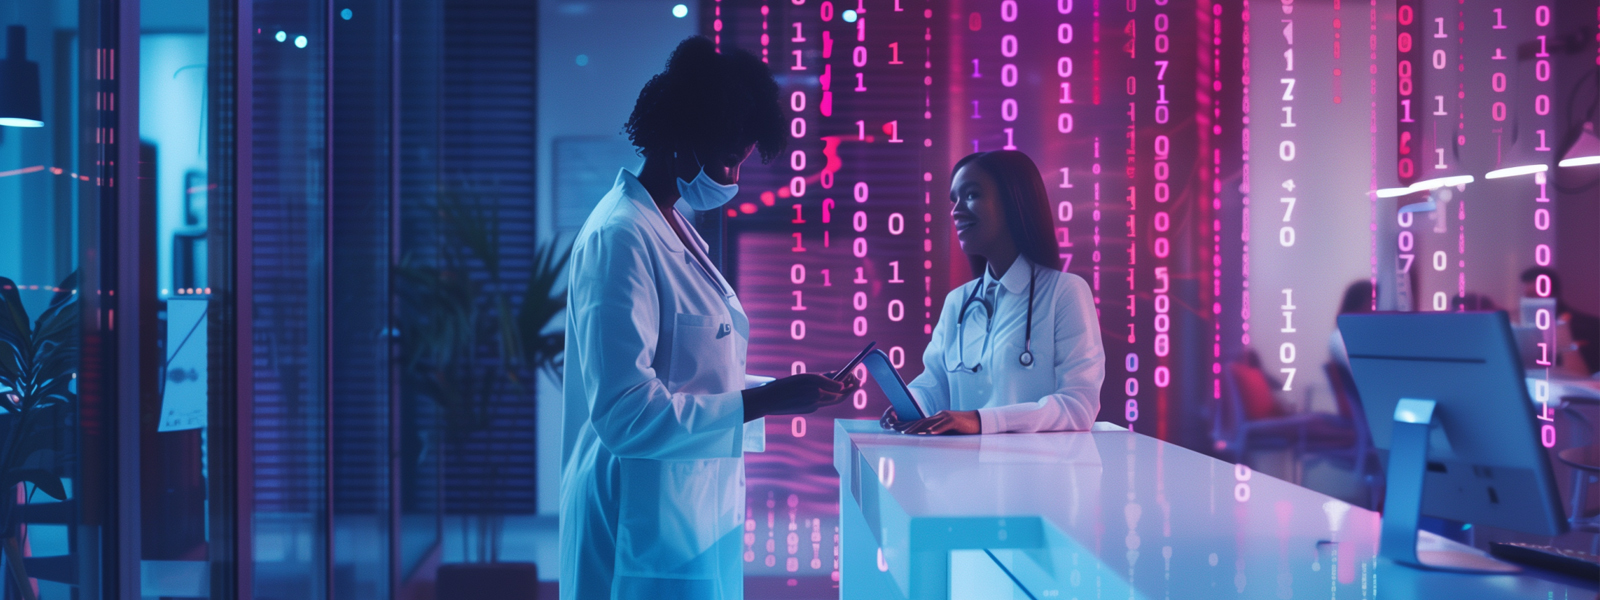 Binary code overlaid on a healthcare setting showcases the dangers of a medical data leak.